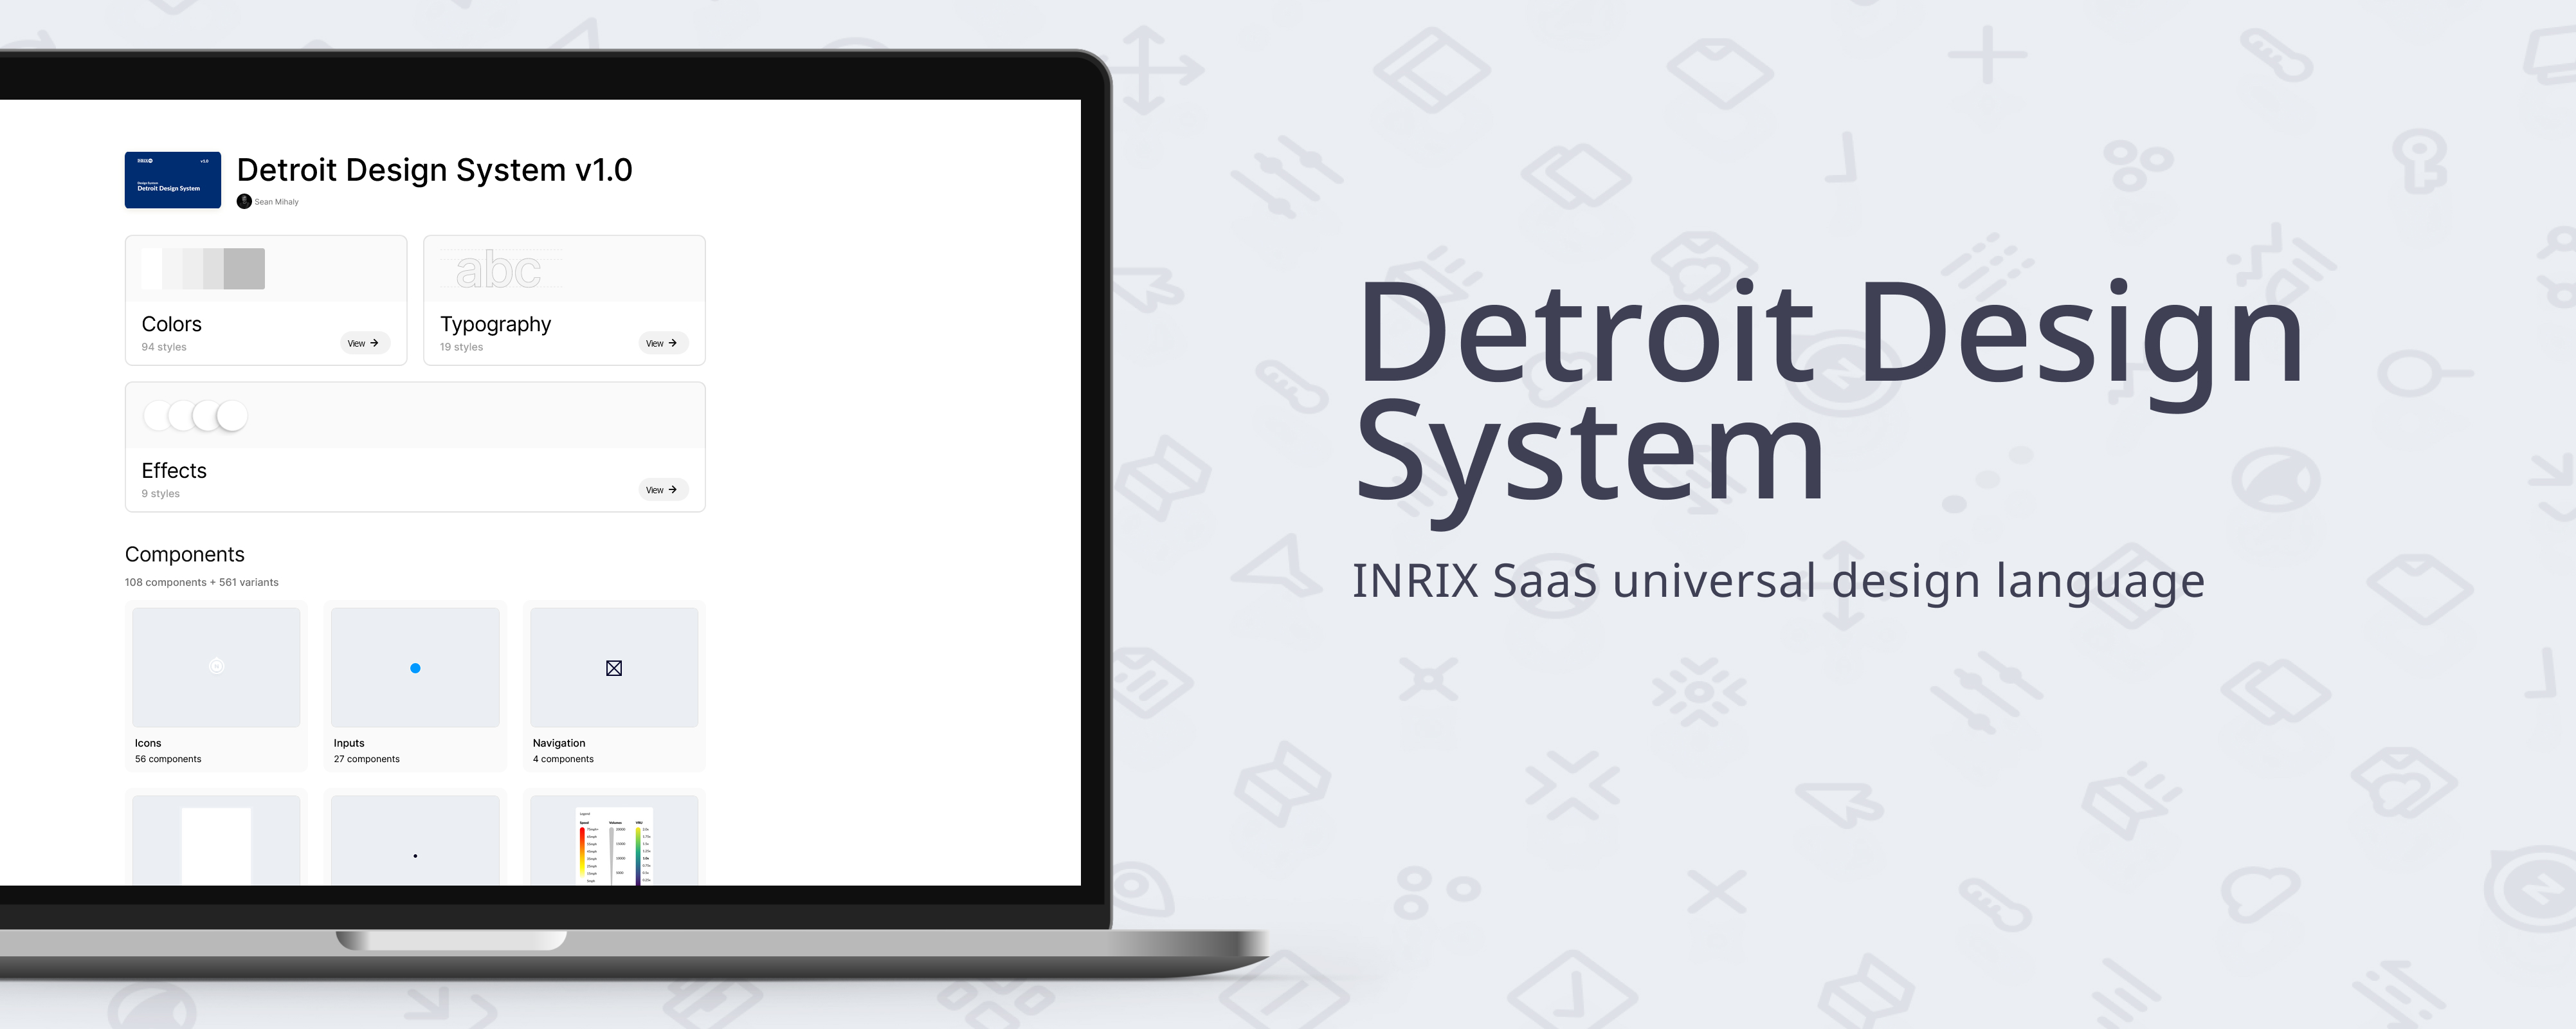 Detroit Design System: INRIX SaaS universal design language